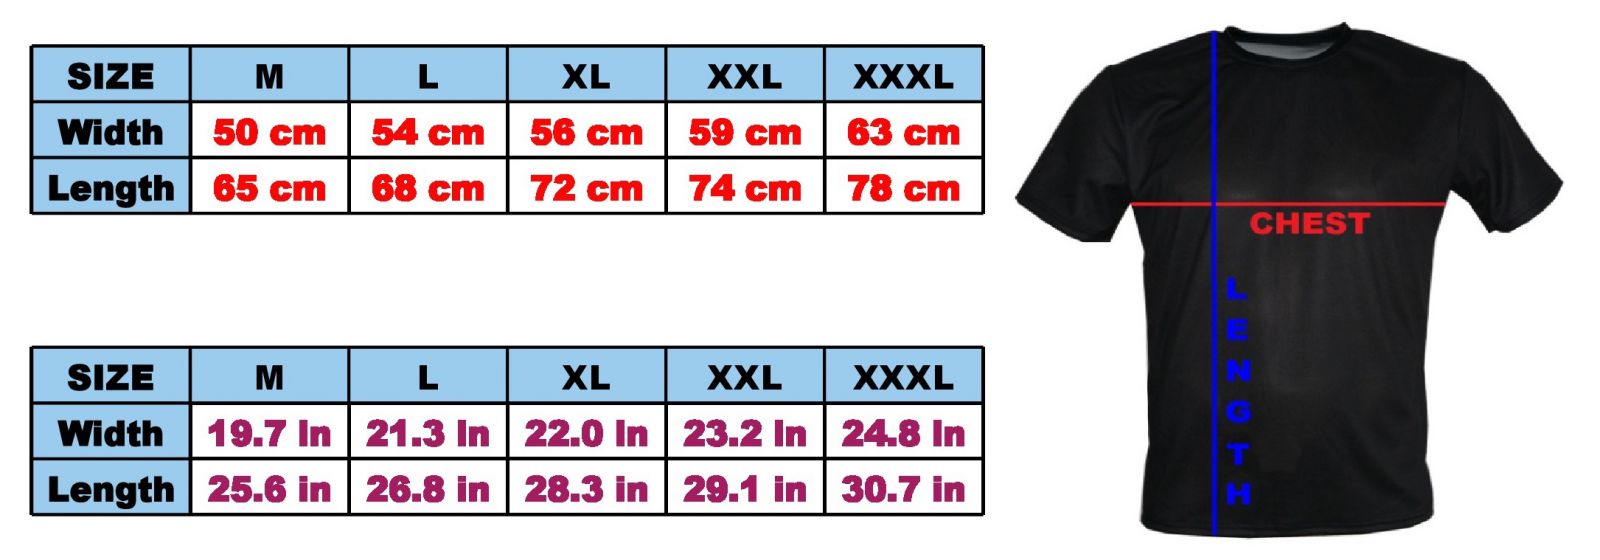 xxl t shirt size guide